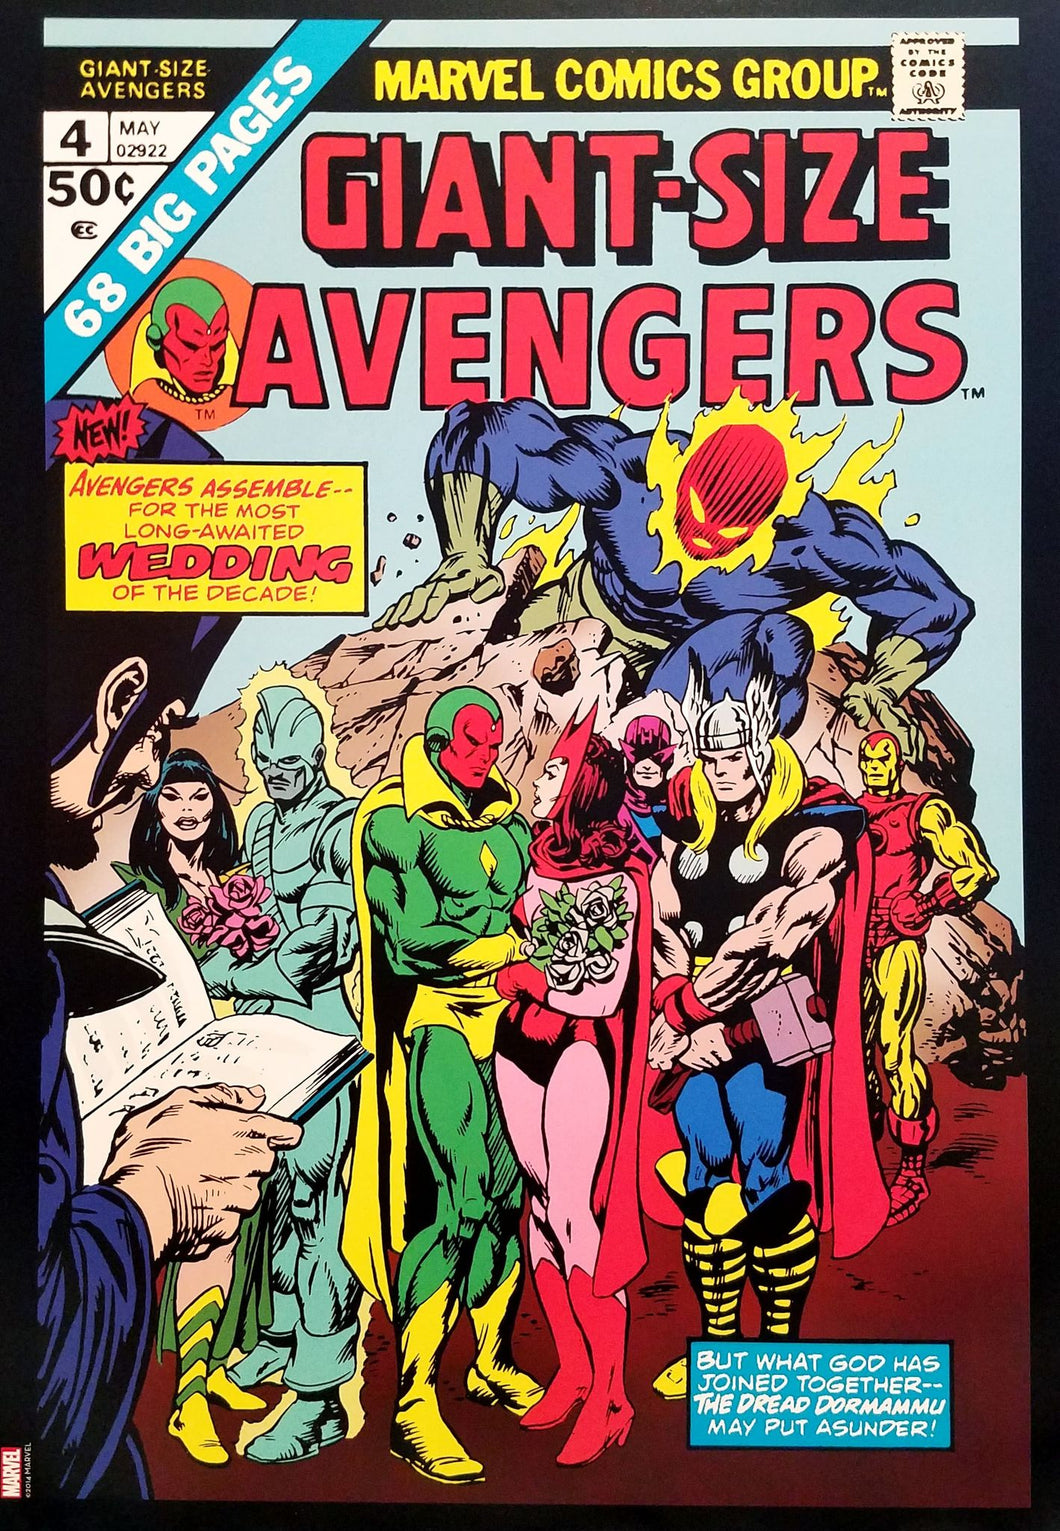 Giant Size Avengers #4 12x16 FRAMED Art Print (Wedding of Vision & Scarlet Witch), New Marvel Comics cardstock